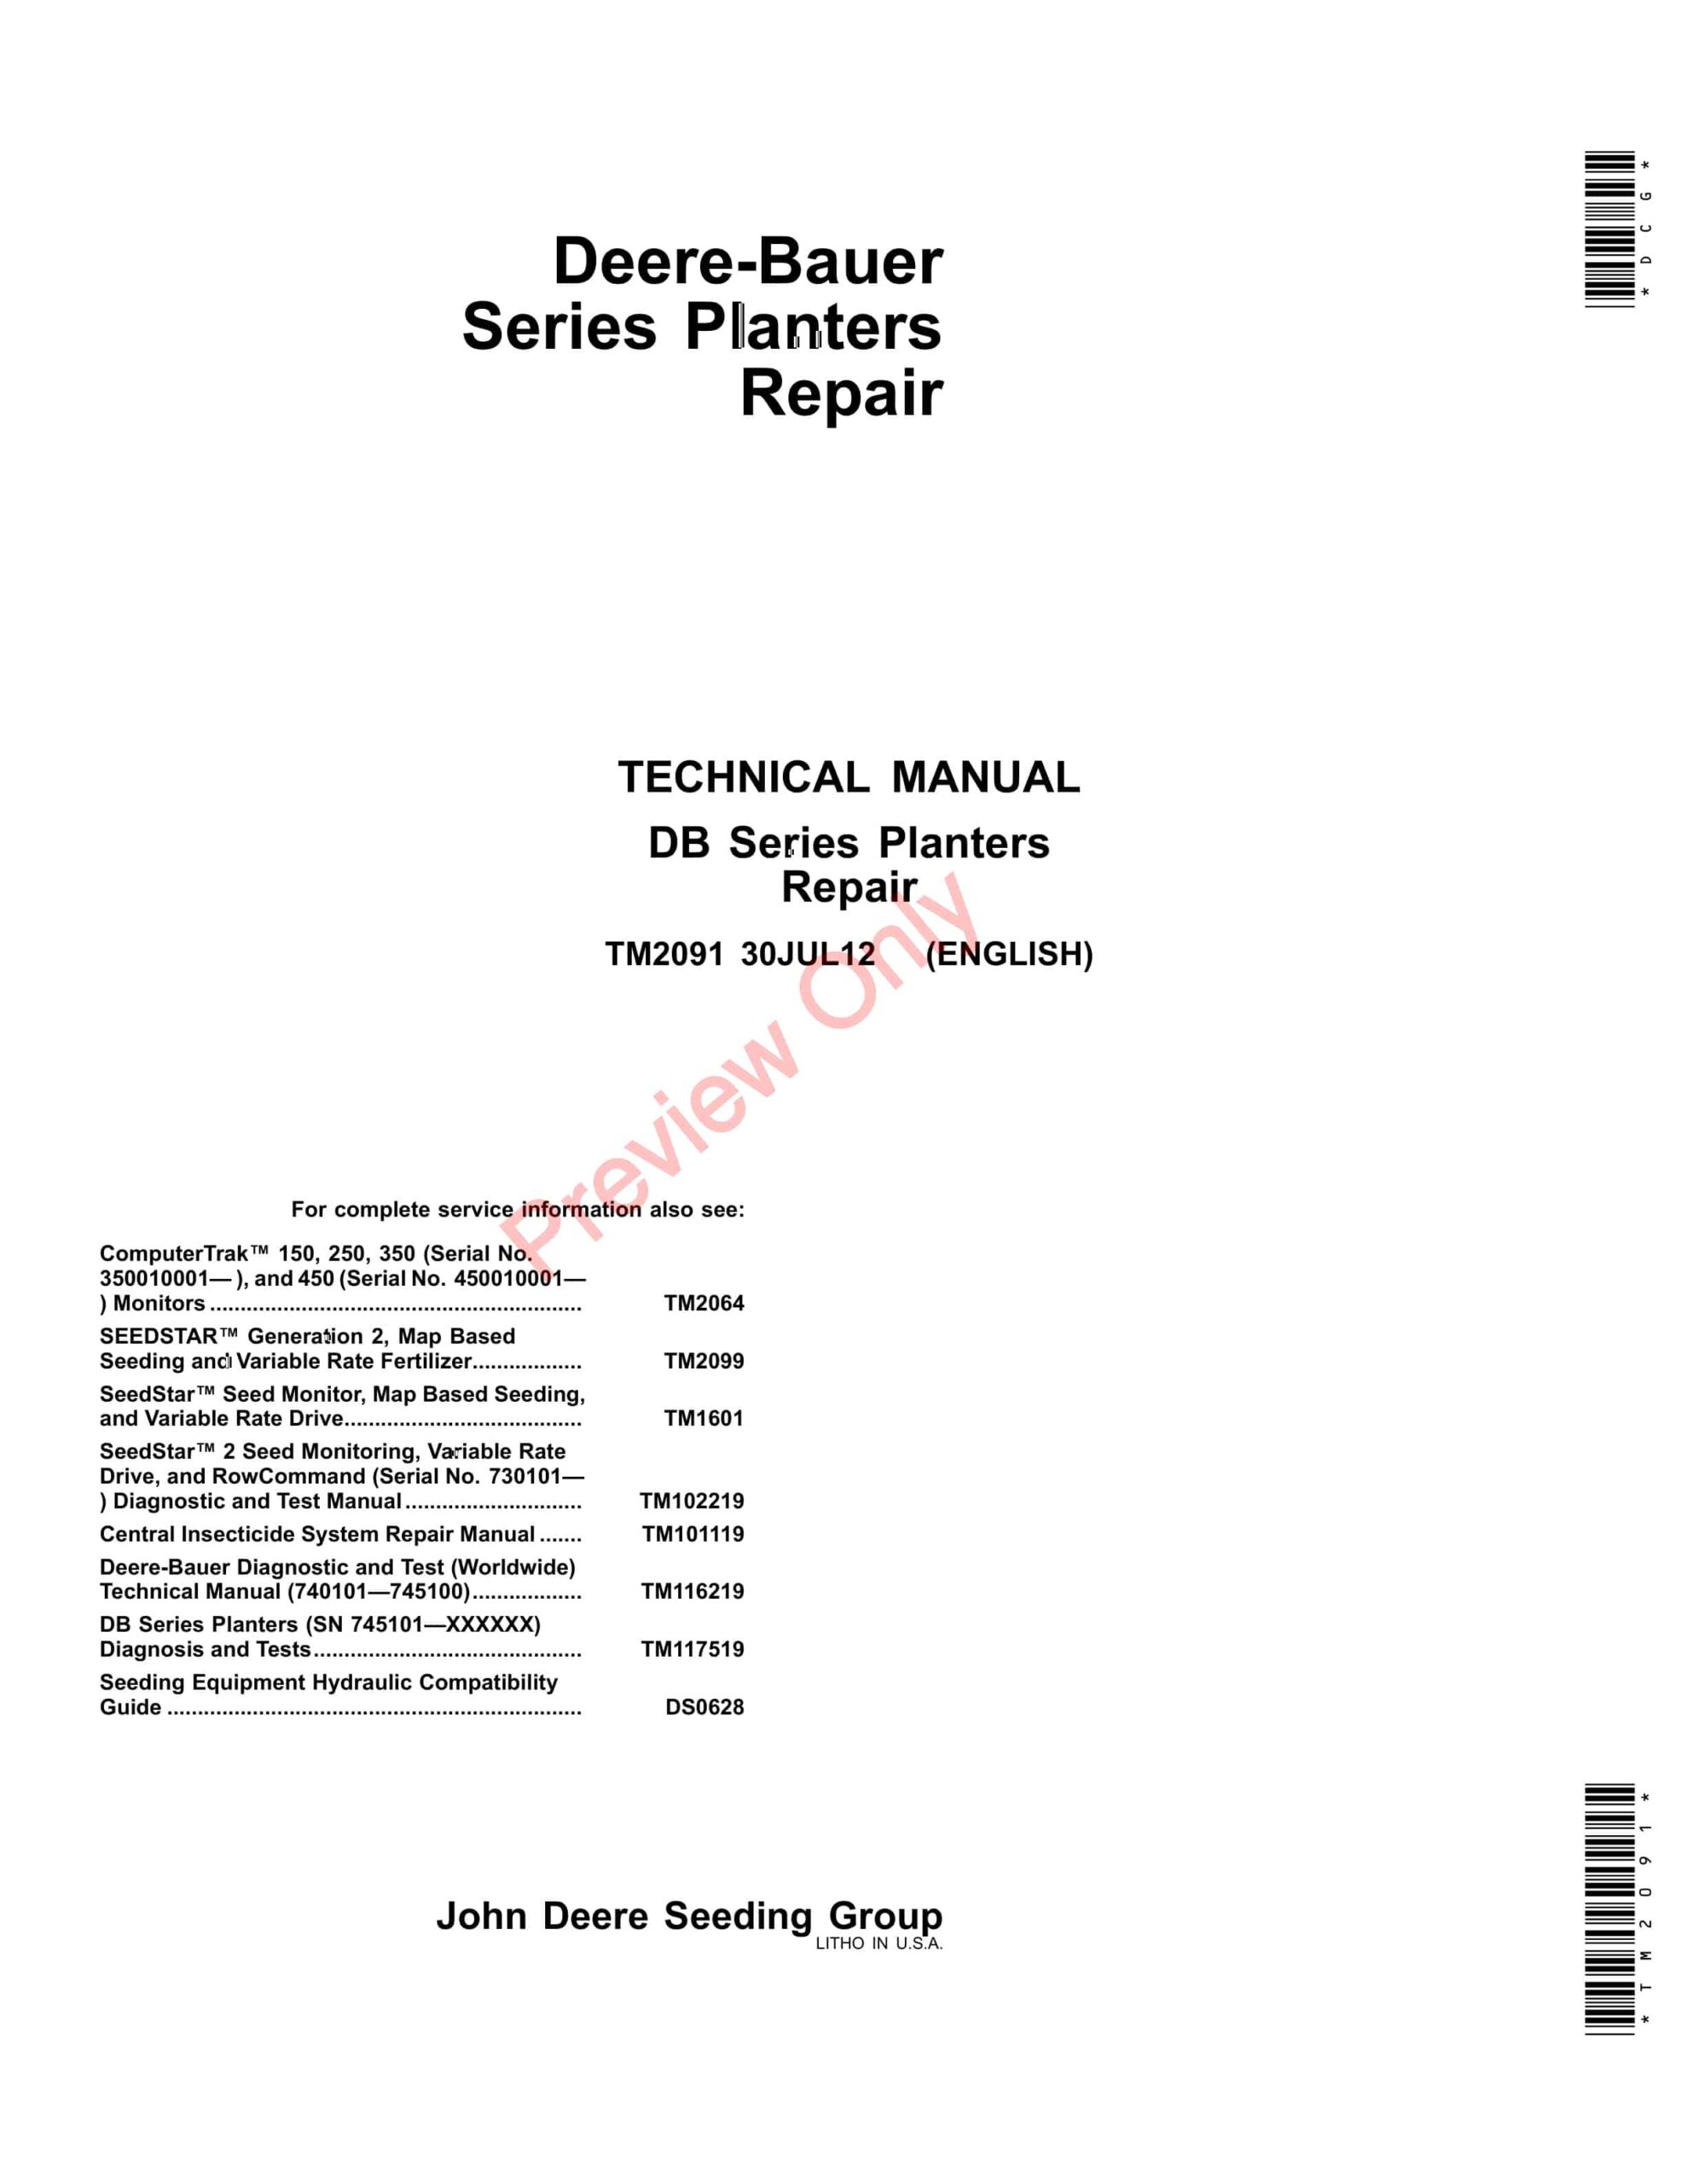 John Deere DeereBauer Planters (000000-745100) Technical Manual TM2091 30JUL12-1